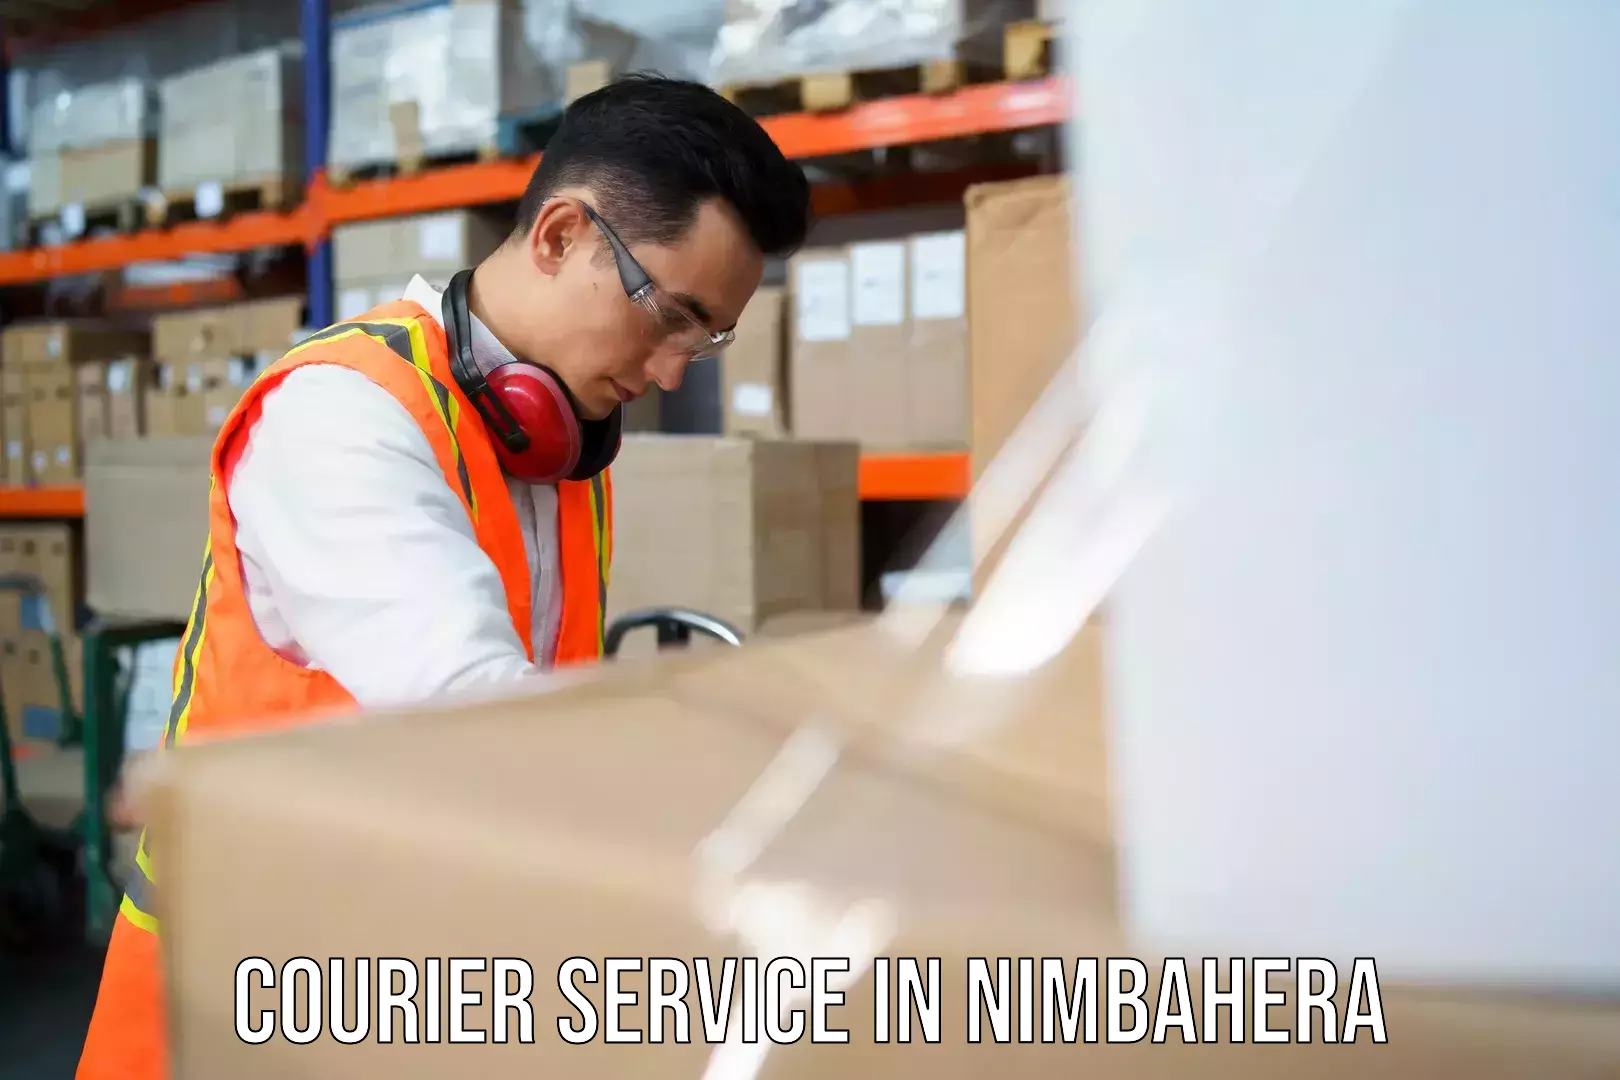 High-priority parcel service in Nimbahera